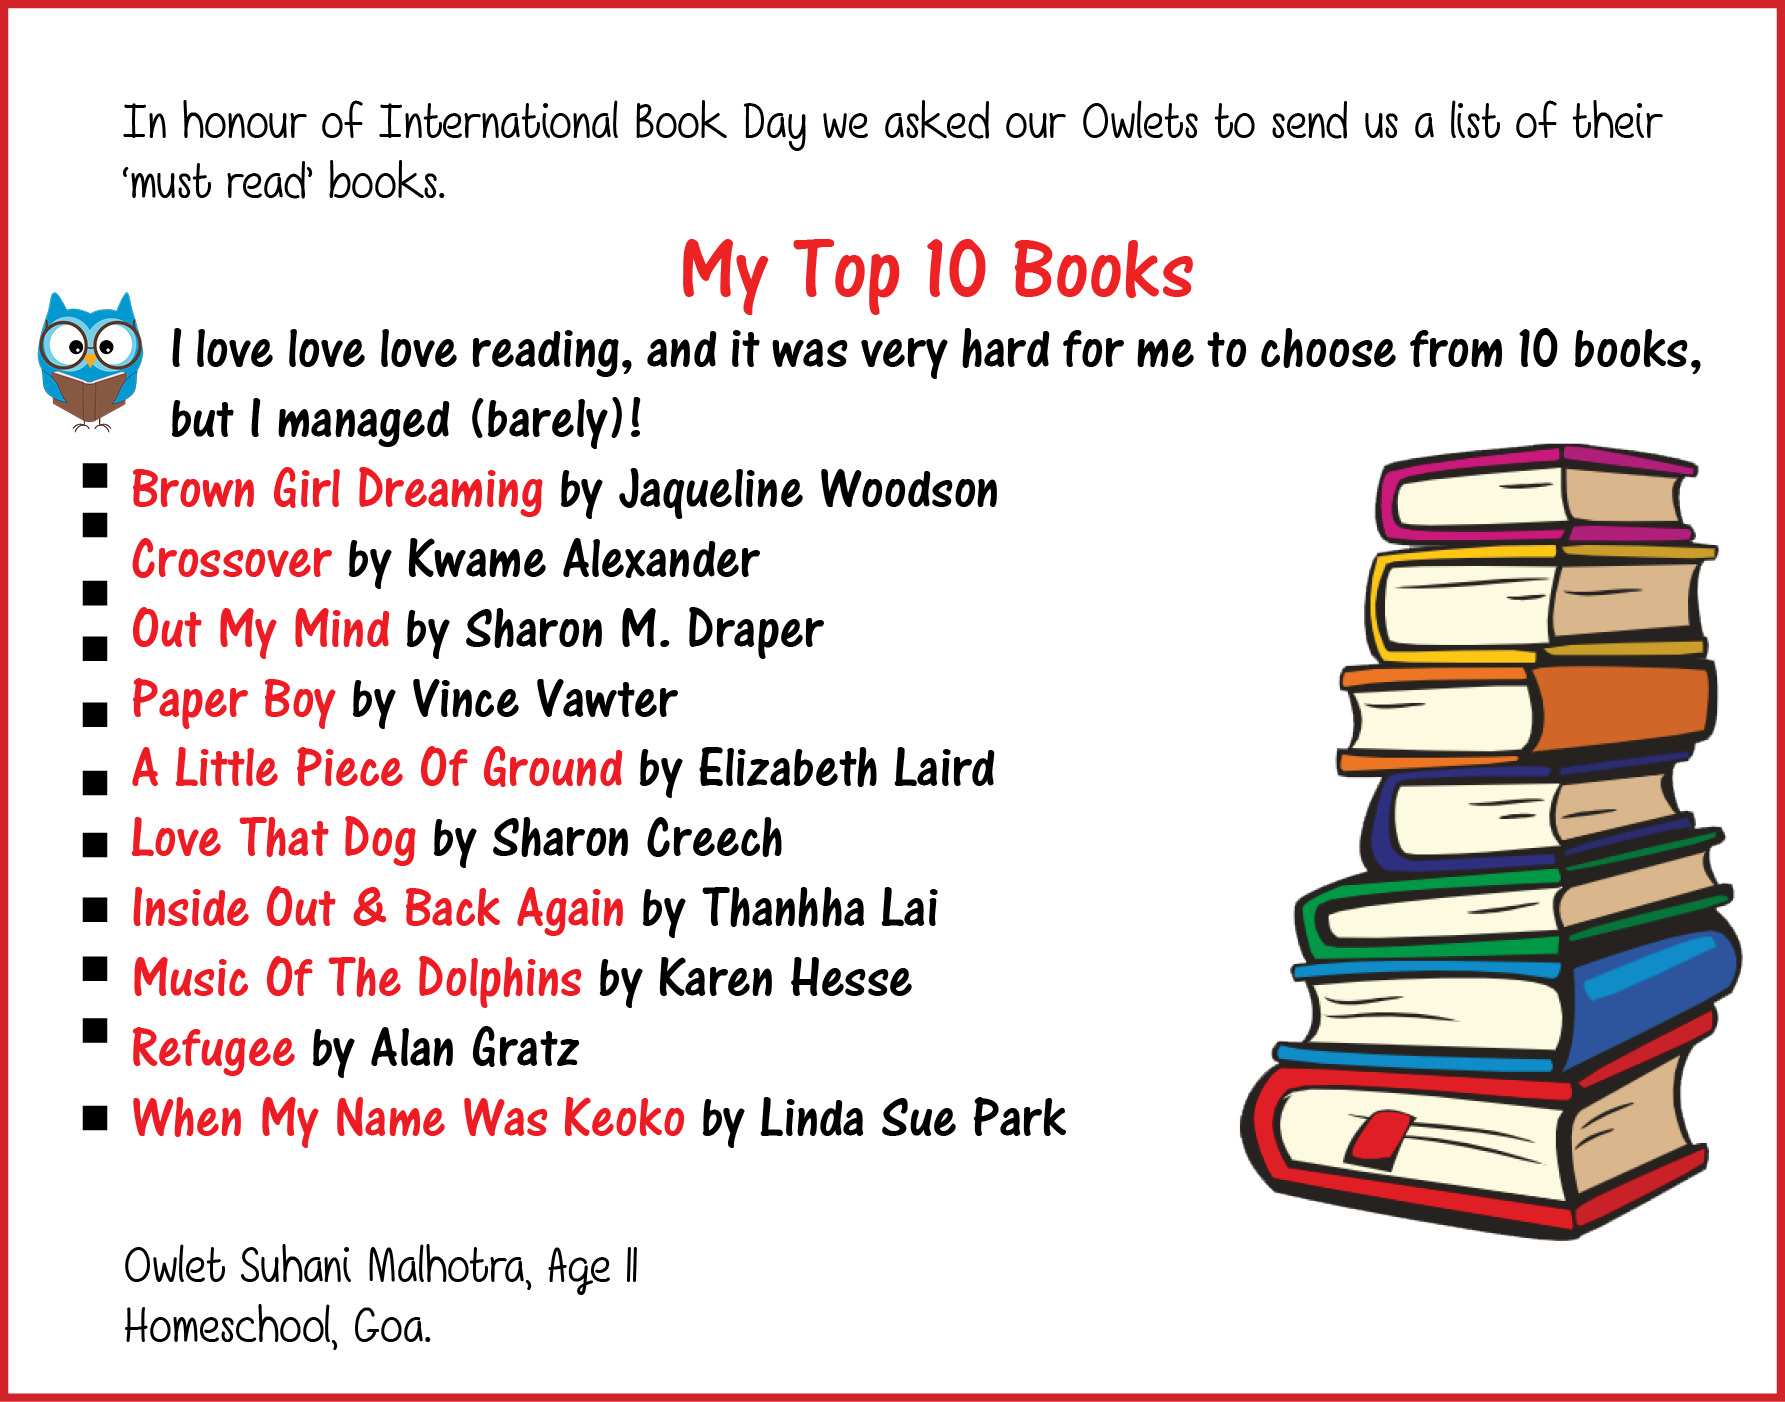 My Top 10 Books